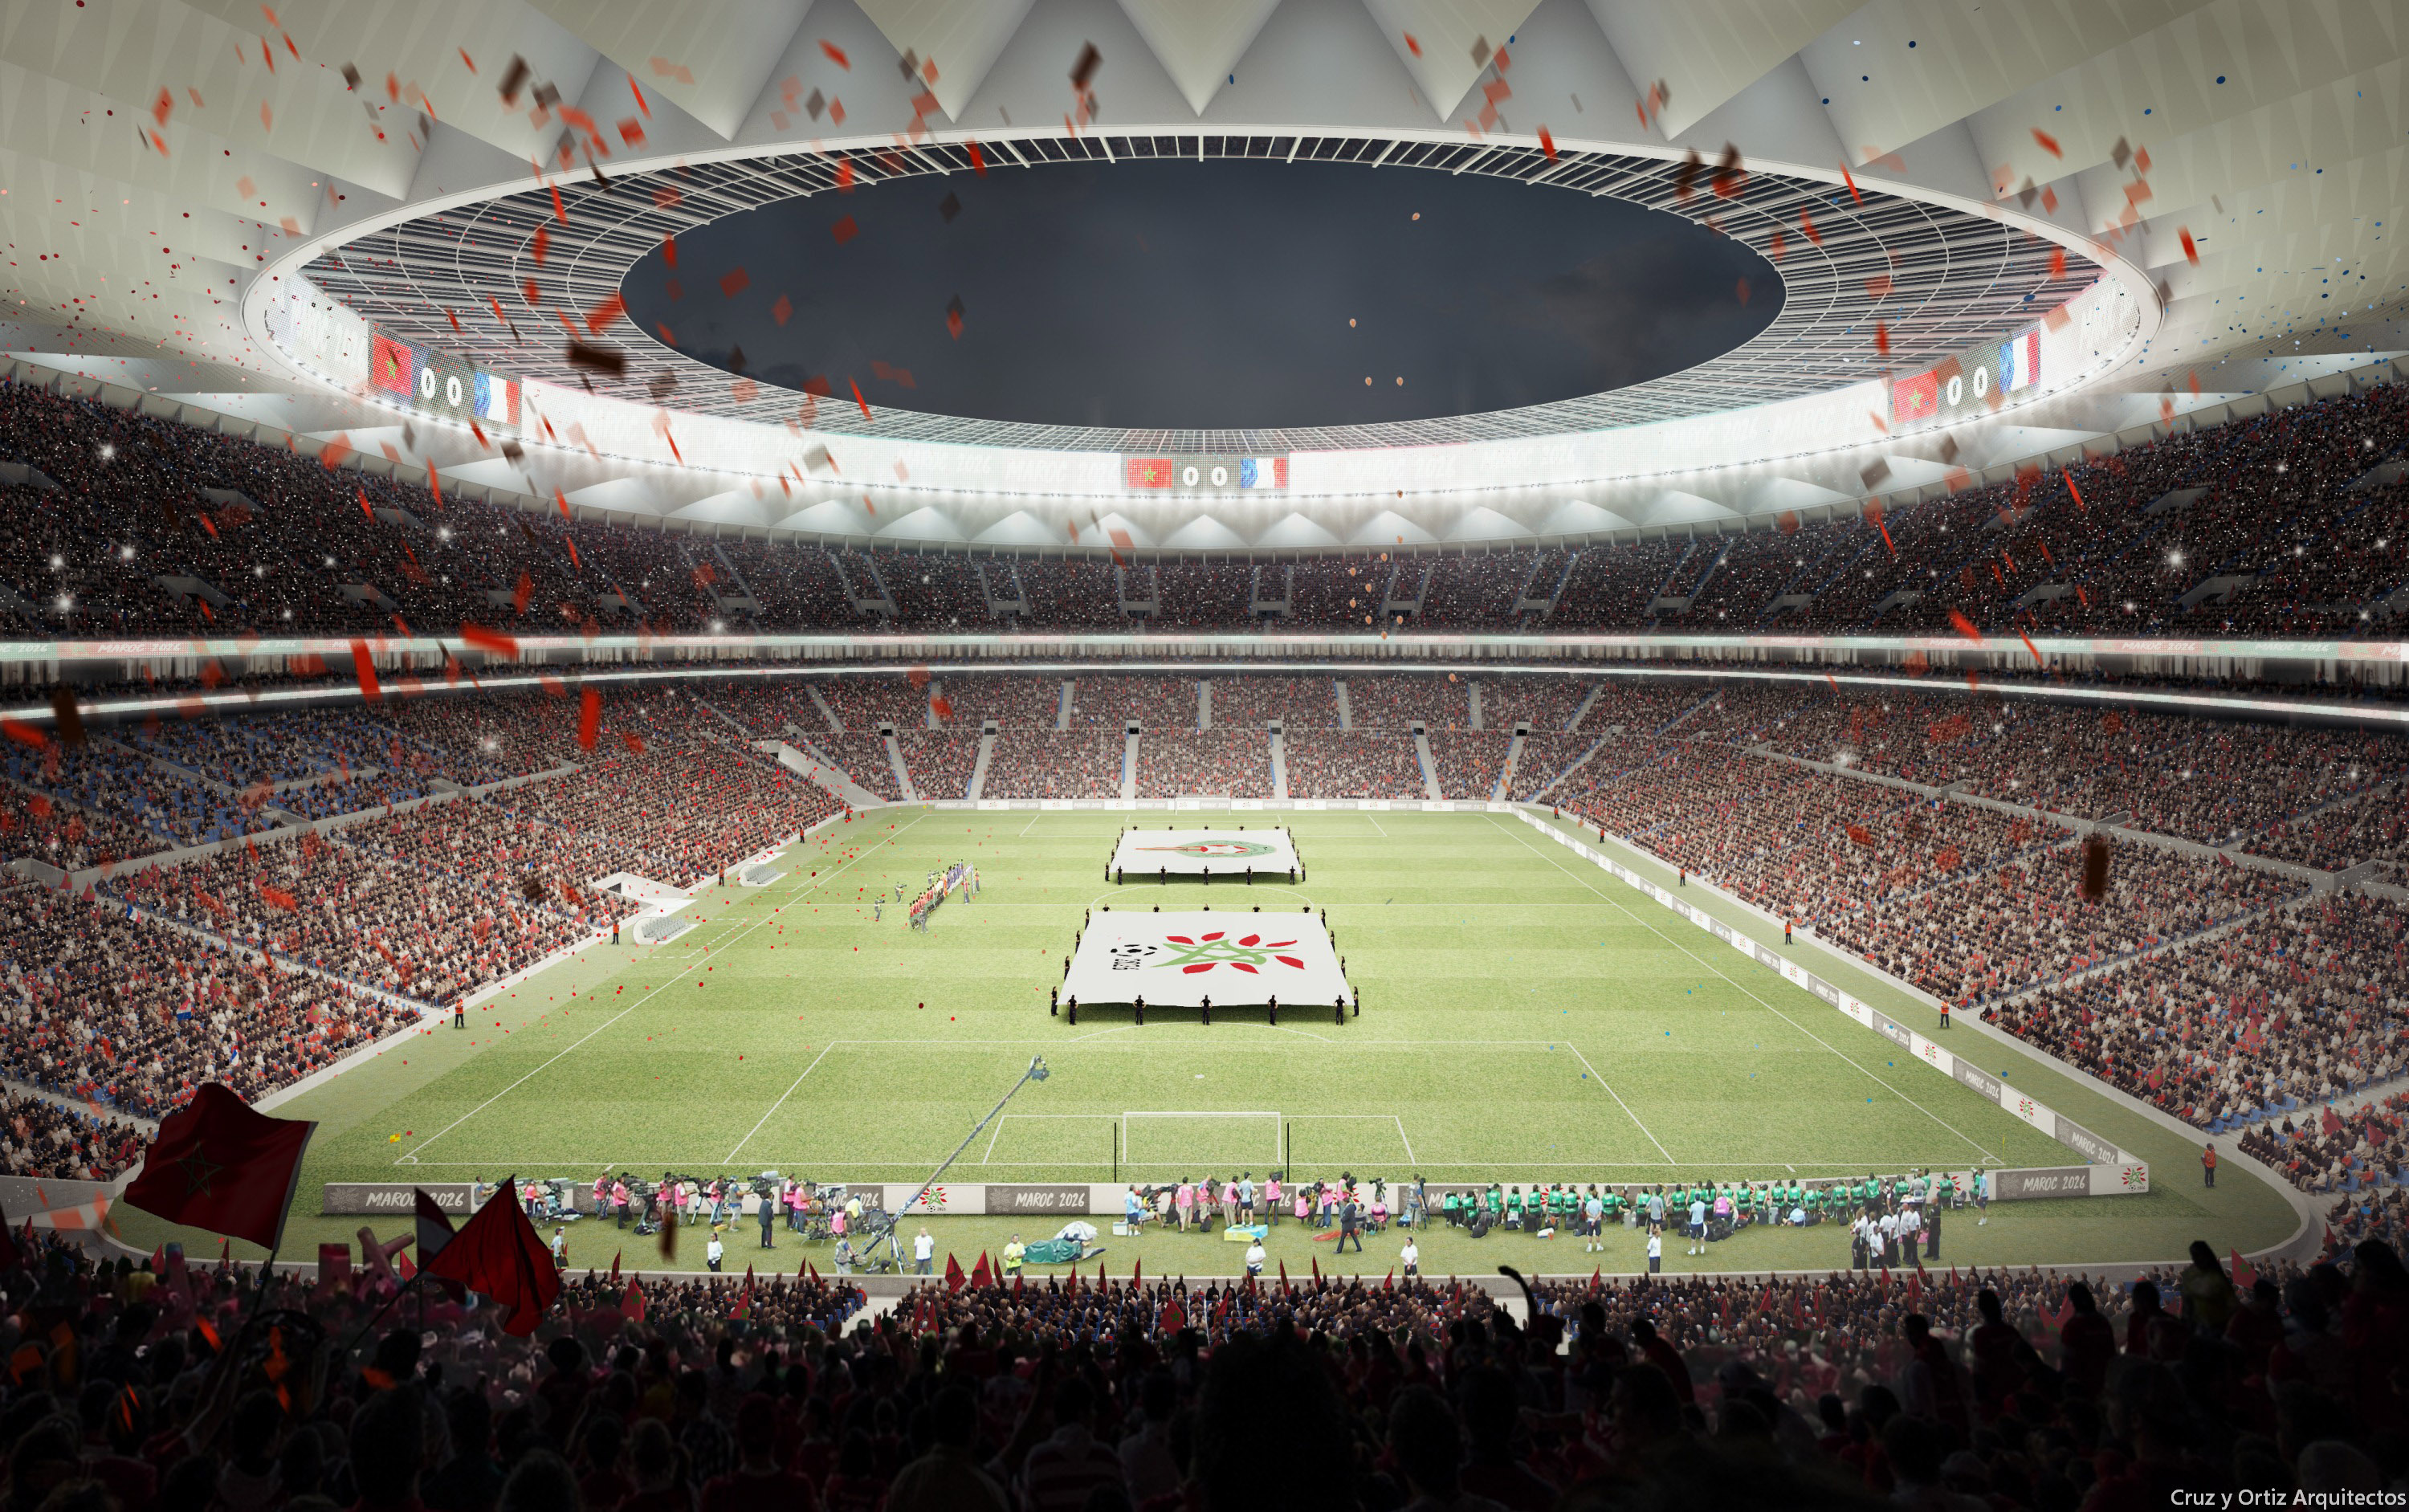 Great final. FIFA World Cup 2026 стадион. Мухаммед 5 Касабланка стадион. Стадион ЧМ 2026 В Мексике. АТТ Стэдиум финал ЧМ 2026.